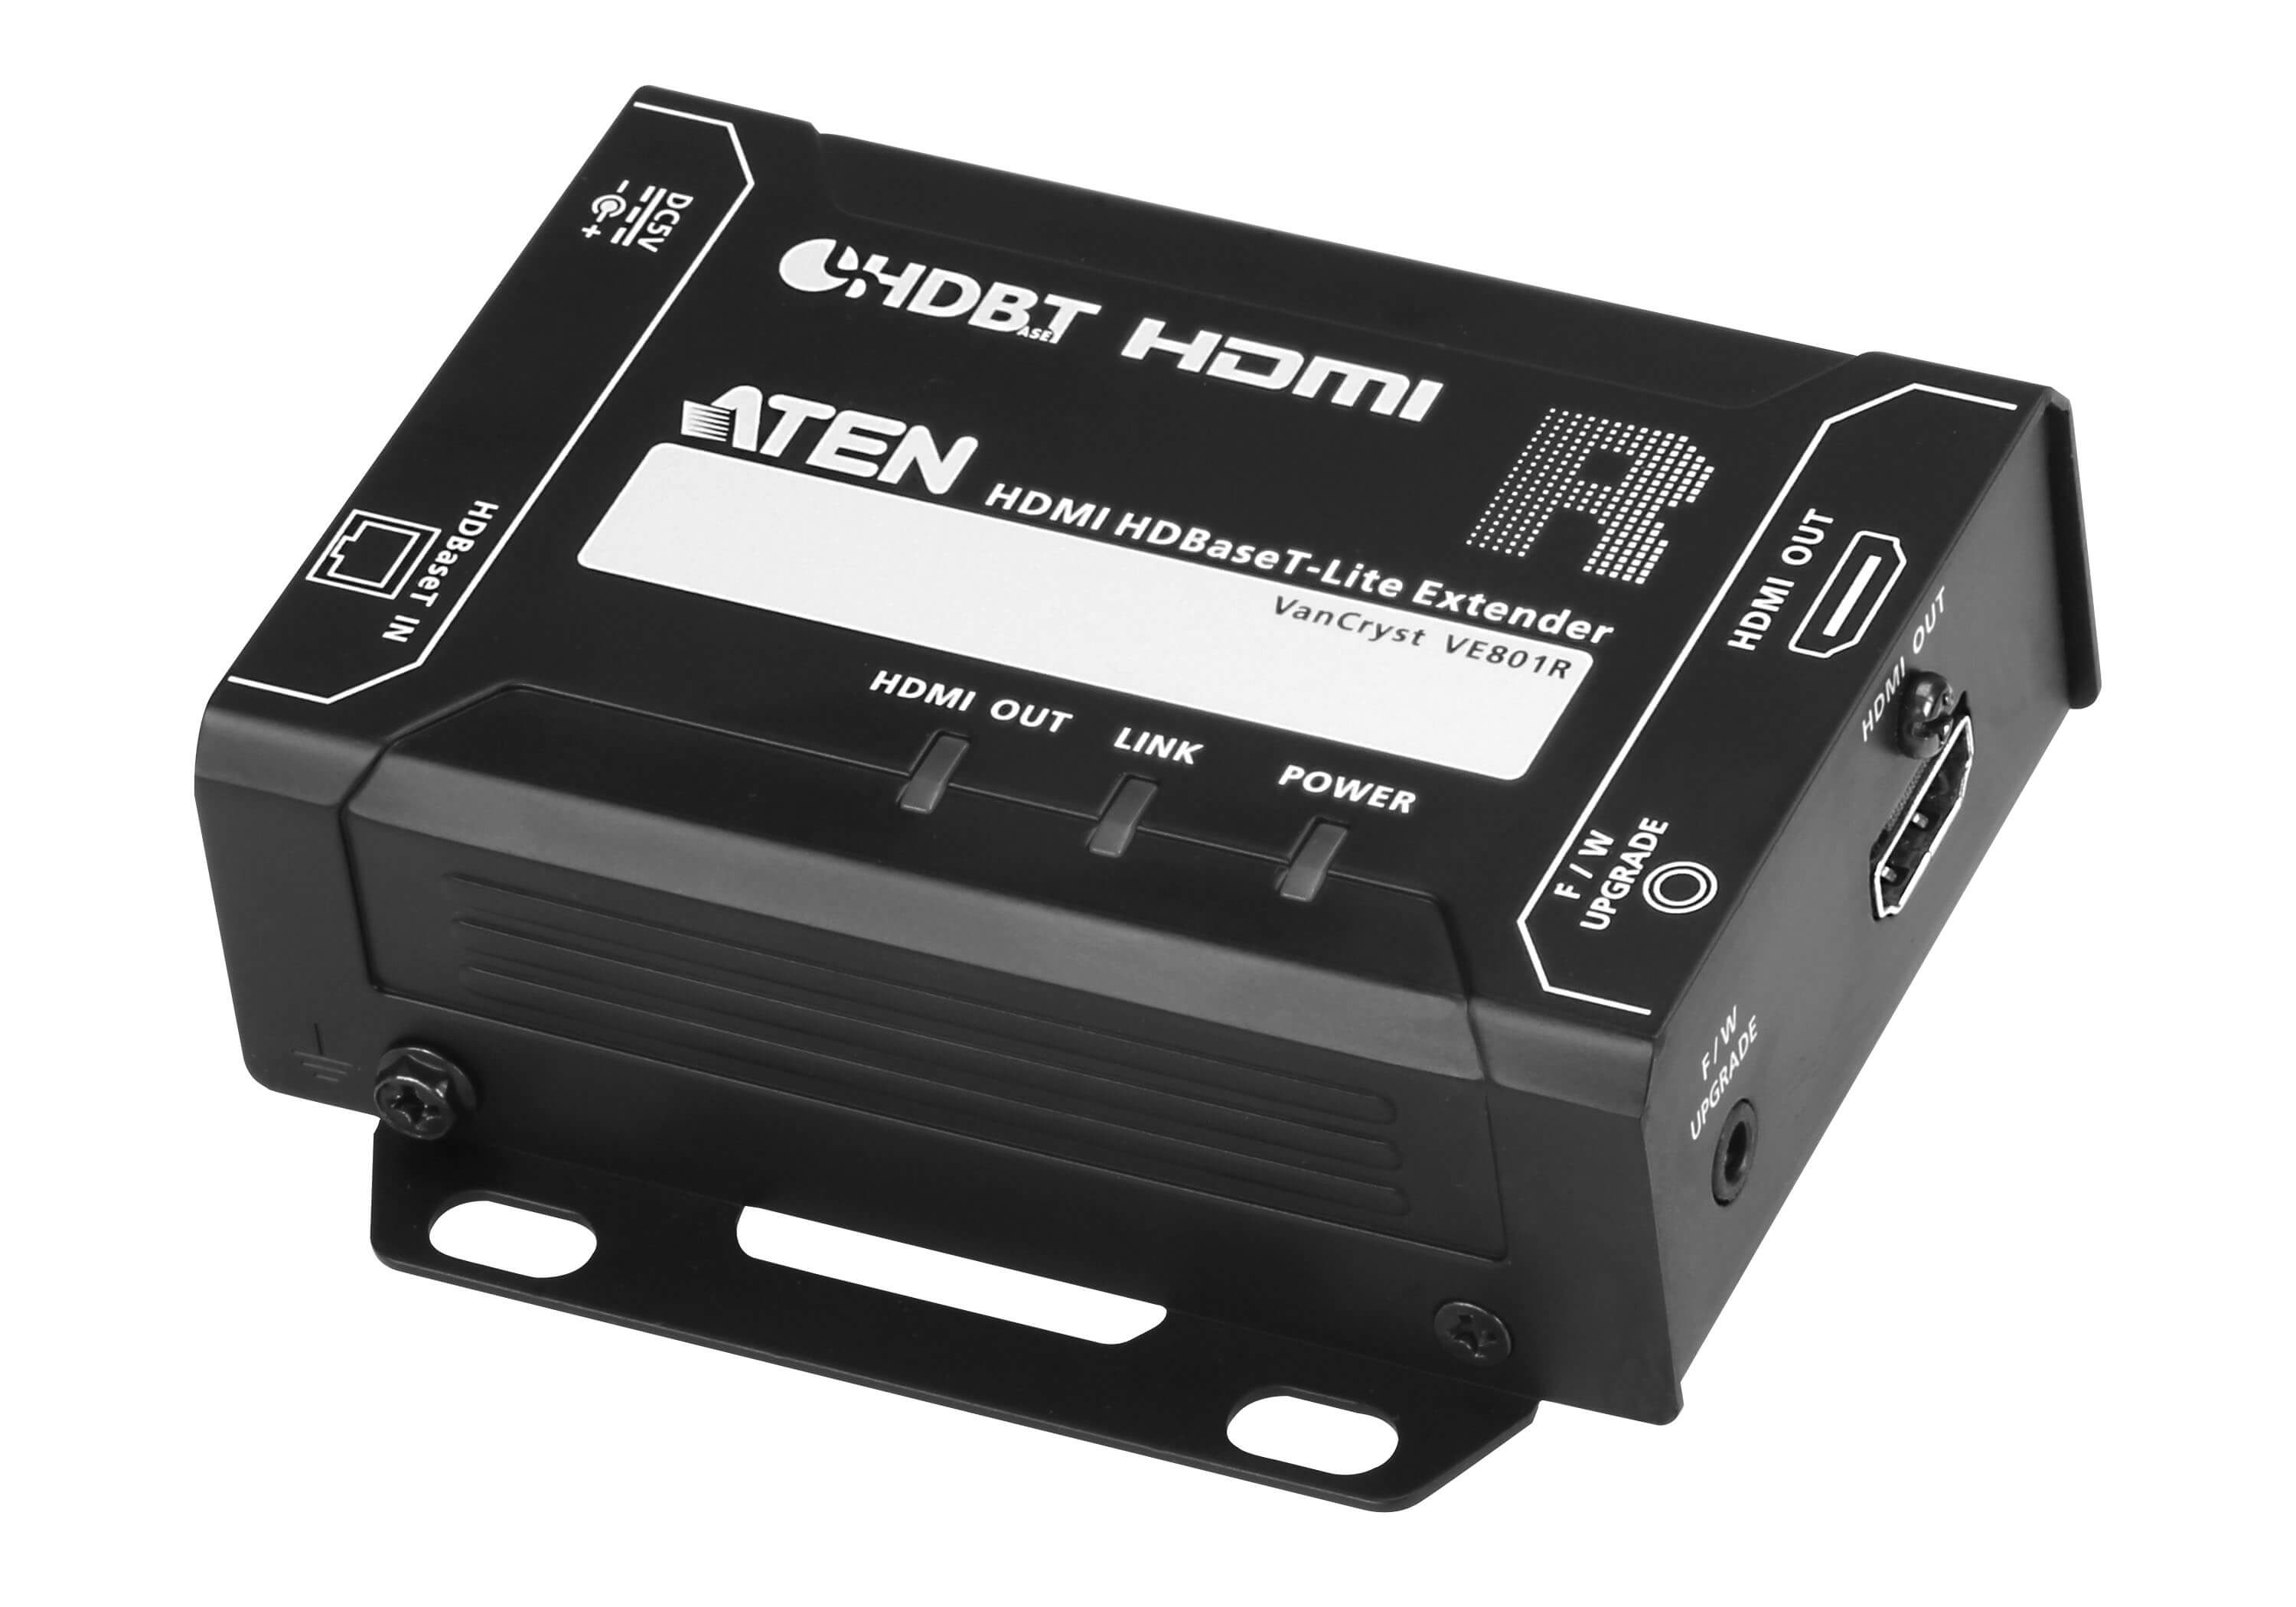 ATEN VanCryst VE801 HDMI HDBaseT-Lite Extender, Receiver